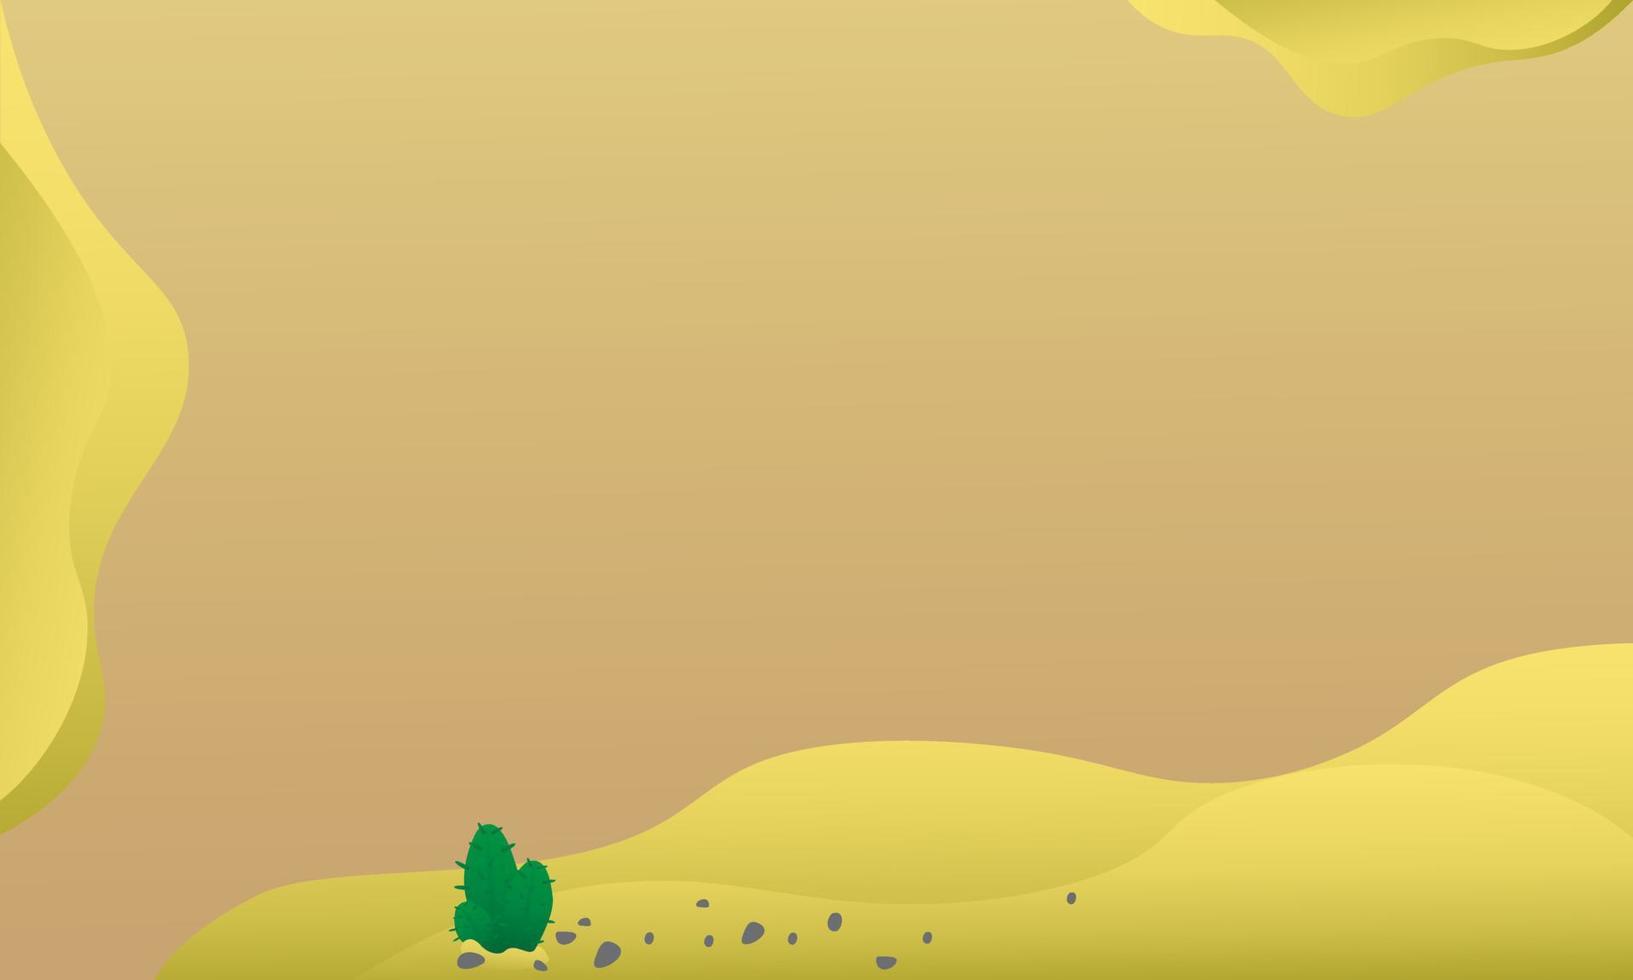 Simple wide desert background vector